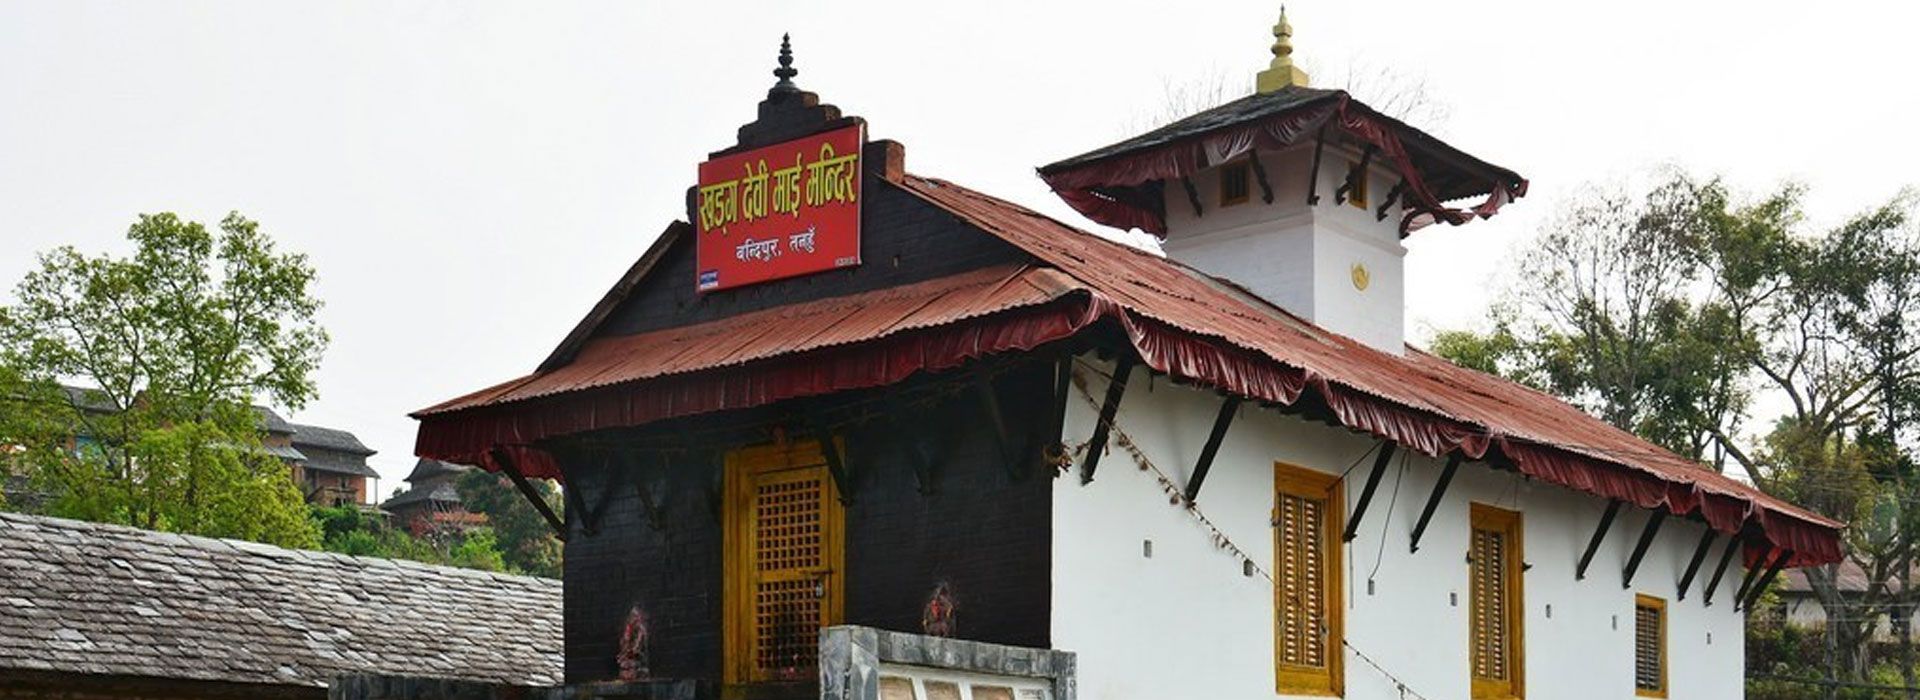 Khadga Devi Temple, Bandipur